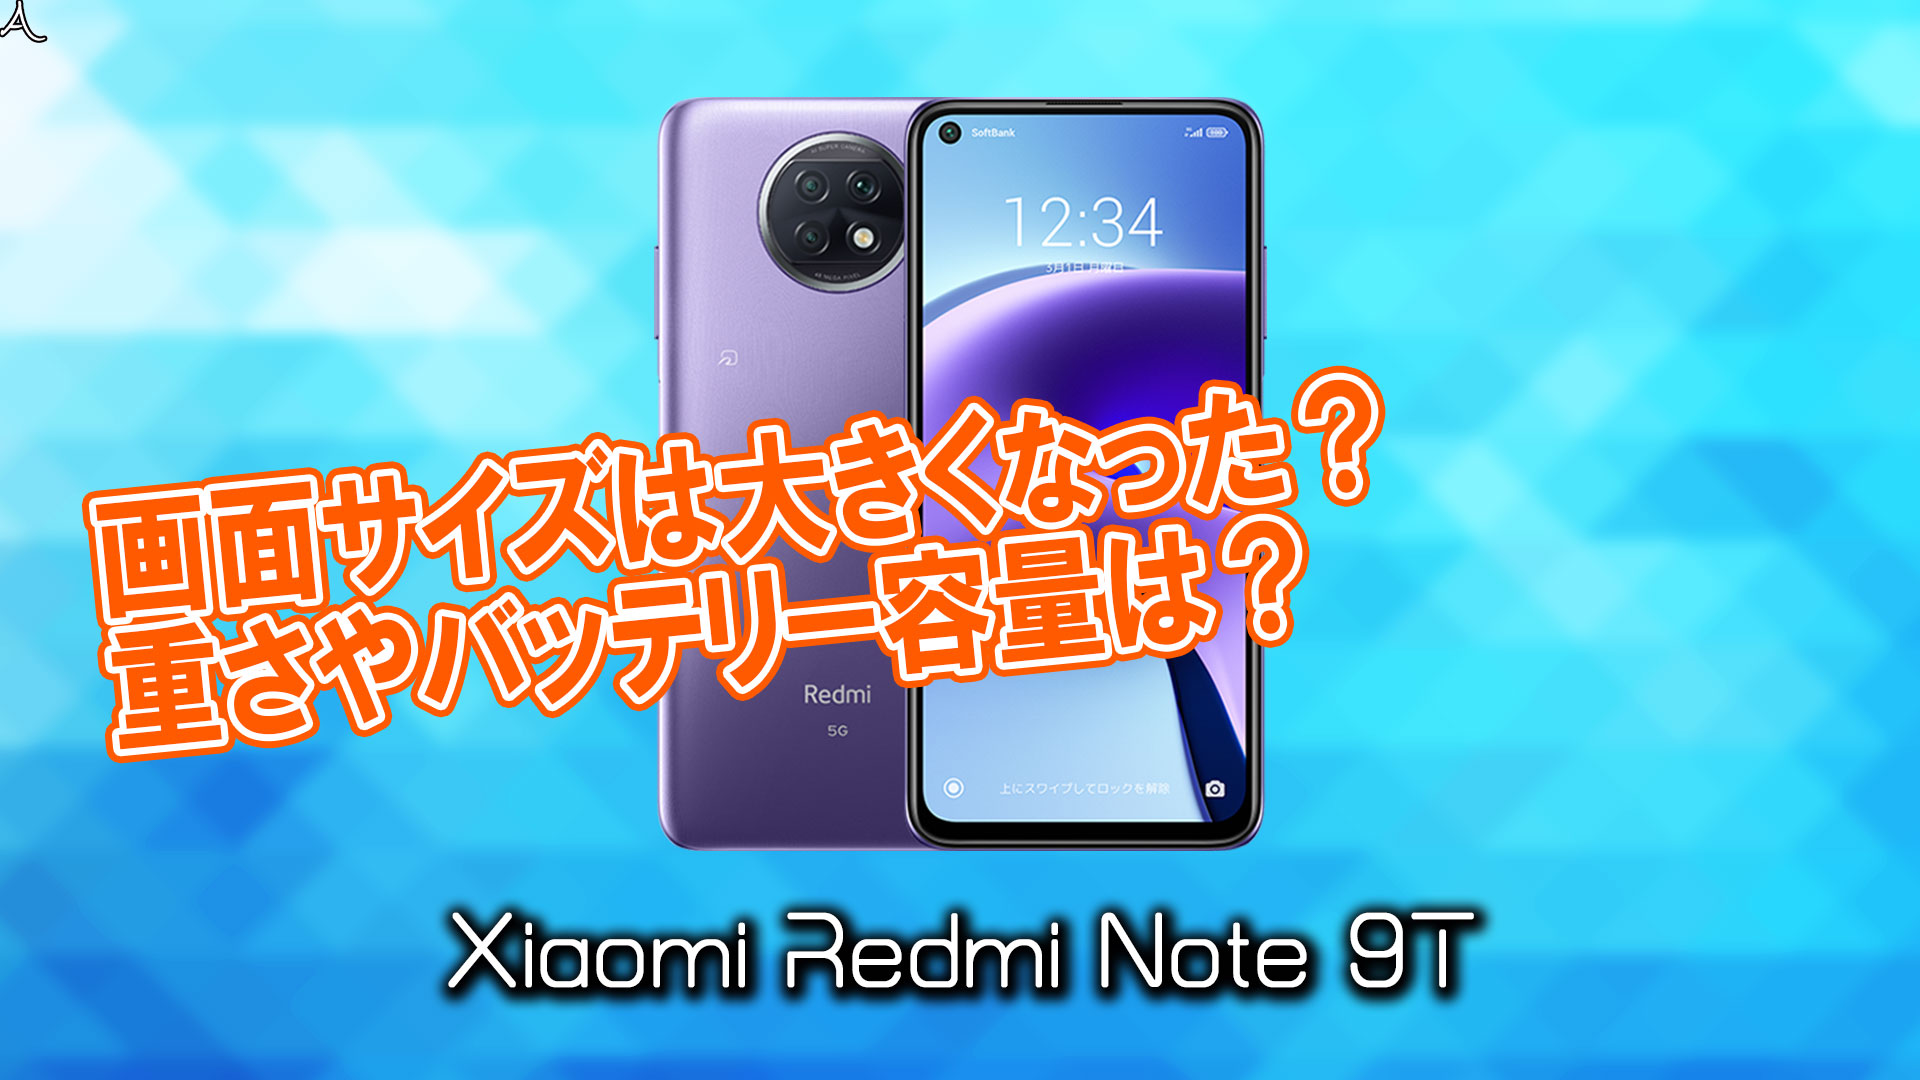 「Xiaomi Redmi Note 9T」のサイズや重さを他のスマホと細かく比較